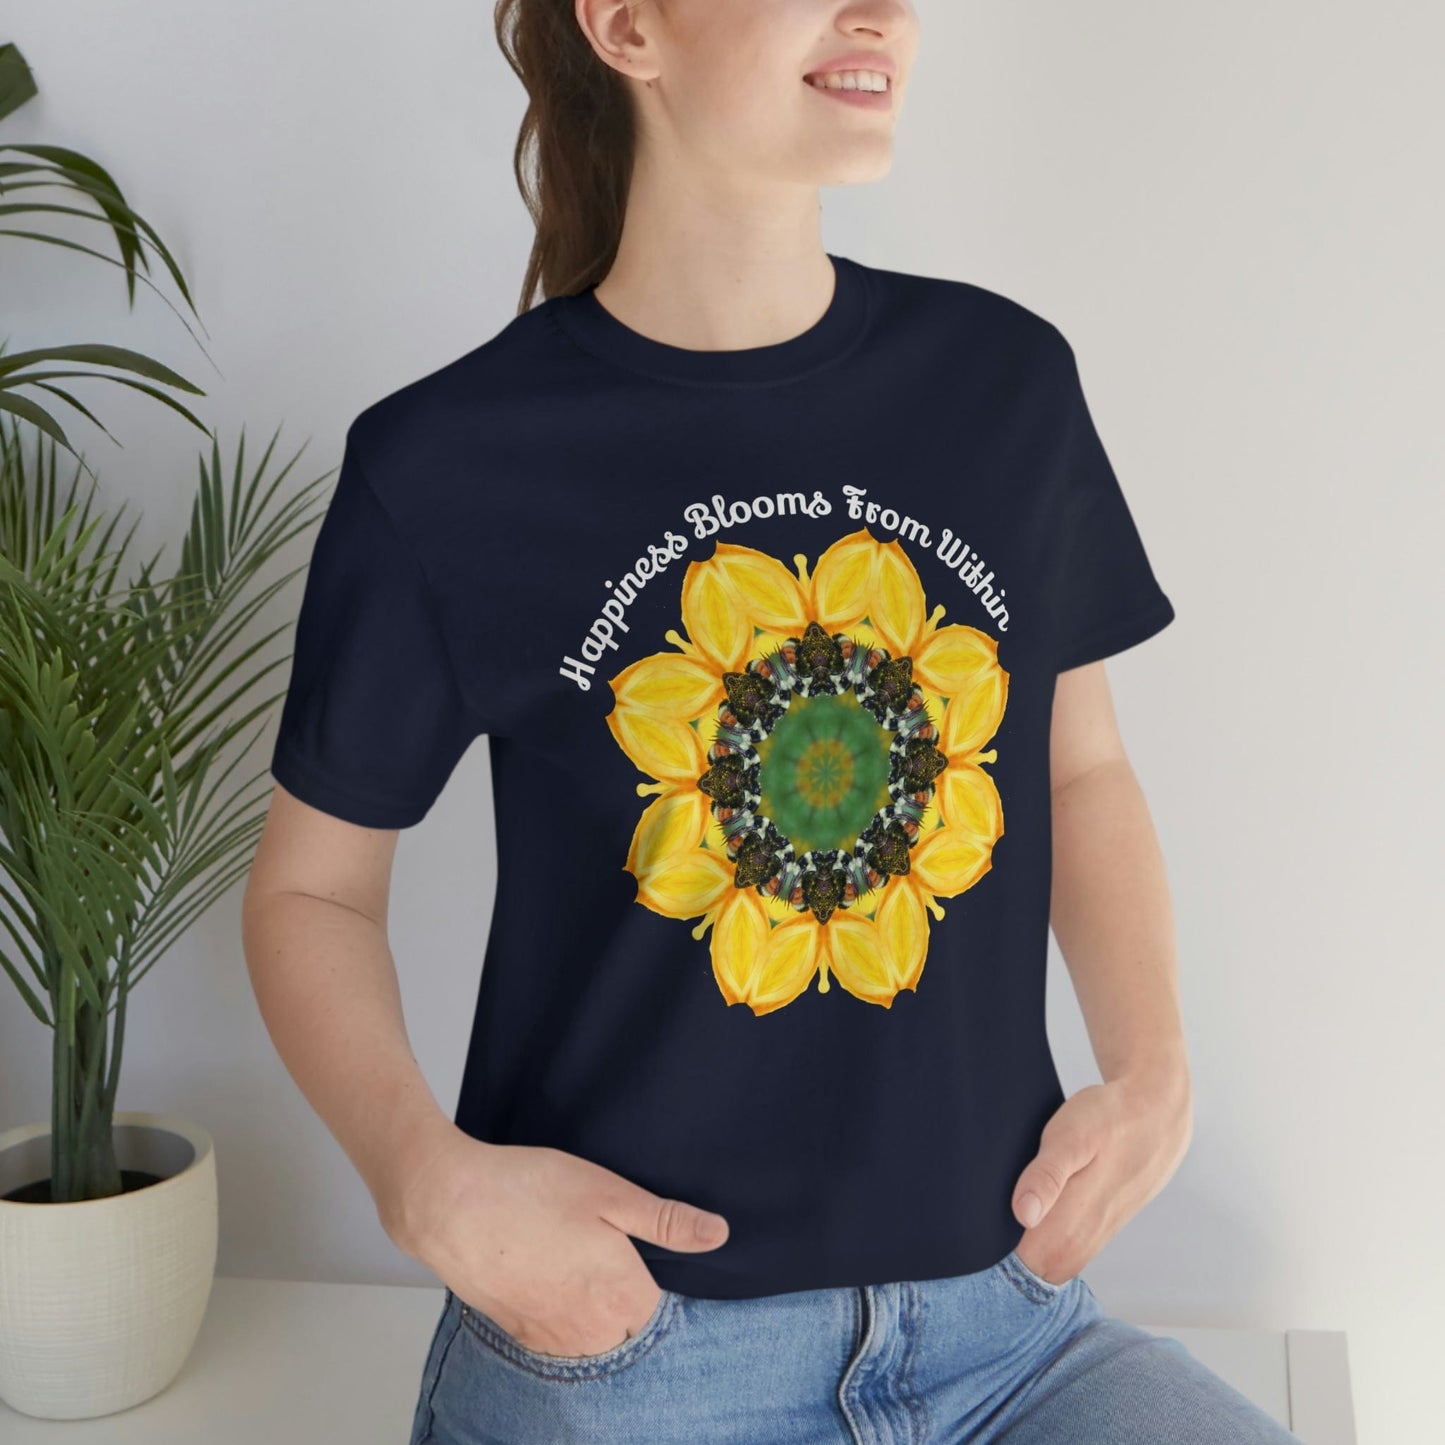 Bee T Shirt, Best Selling Shirts, Poet Shirt, Zen Mystical Cottage Core Insect Shirt, Witty Bug Shirt, Cute Shirts Teens, Mandala T Shirt A